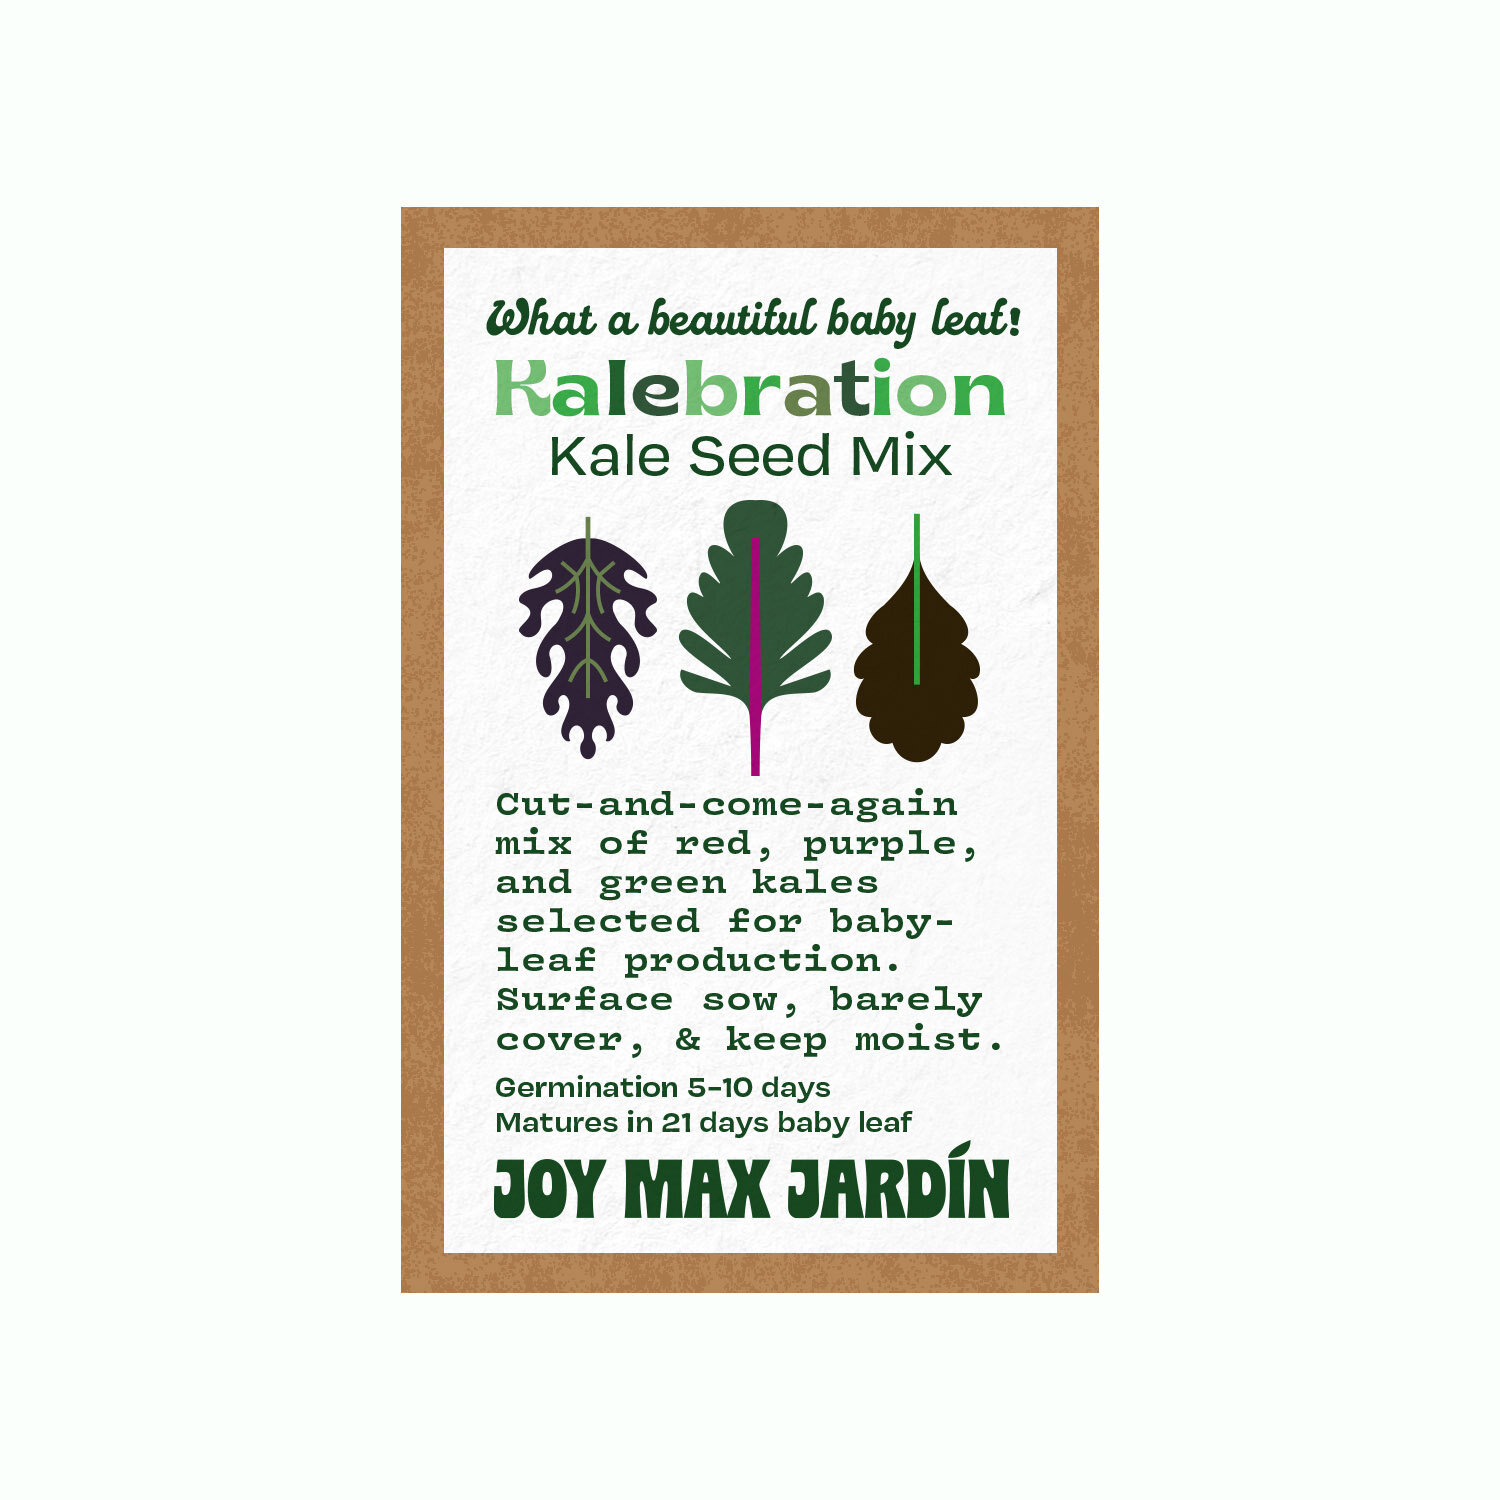 Joy Max Jardin Kalebration Seed.jpg